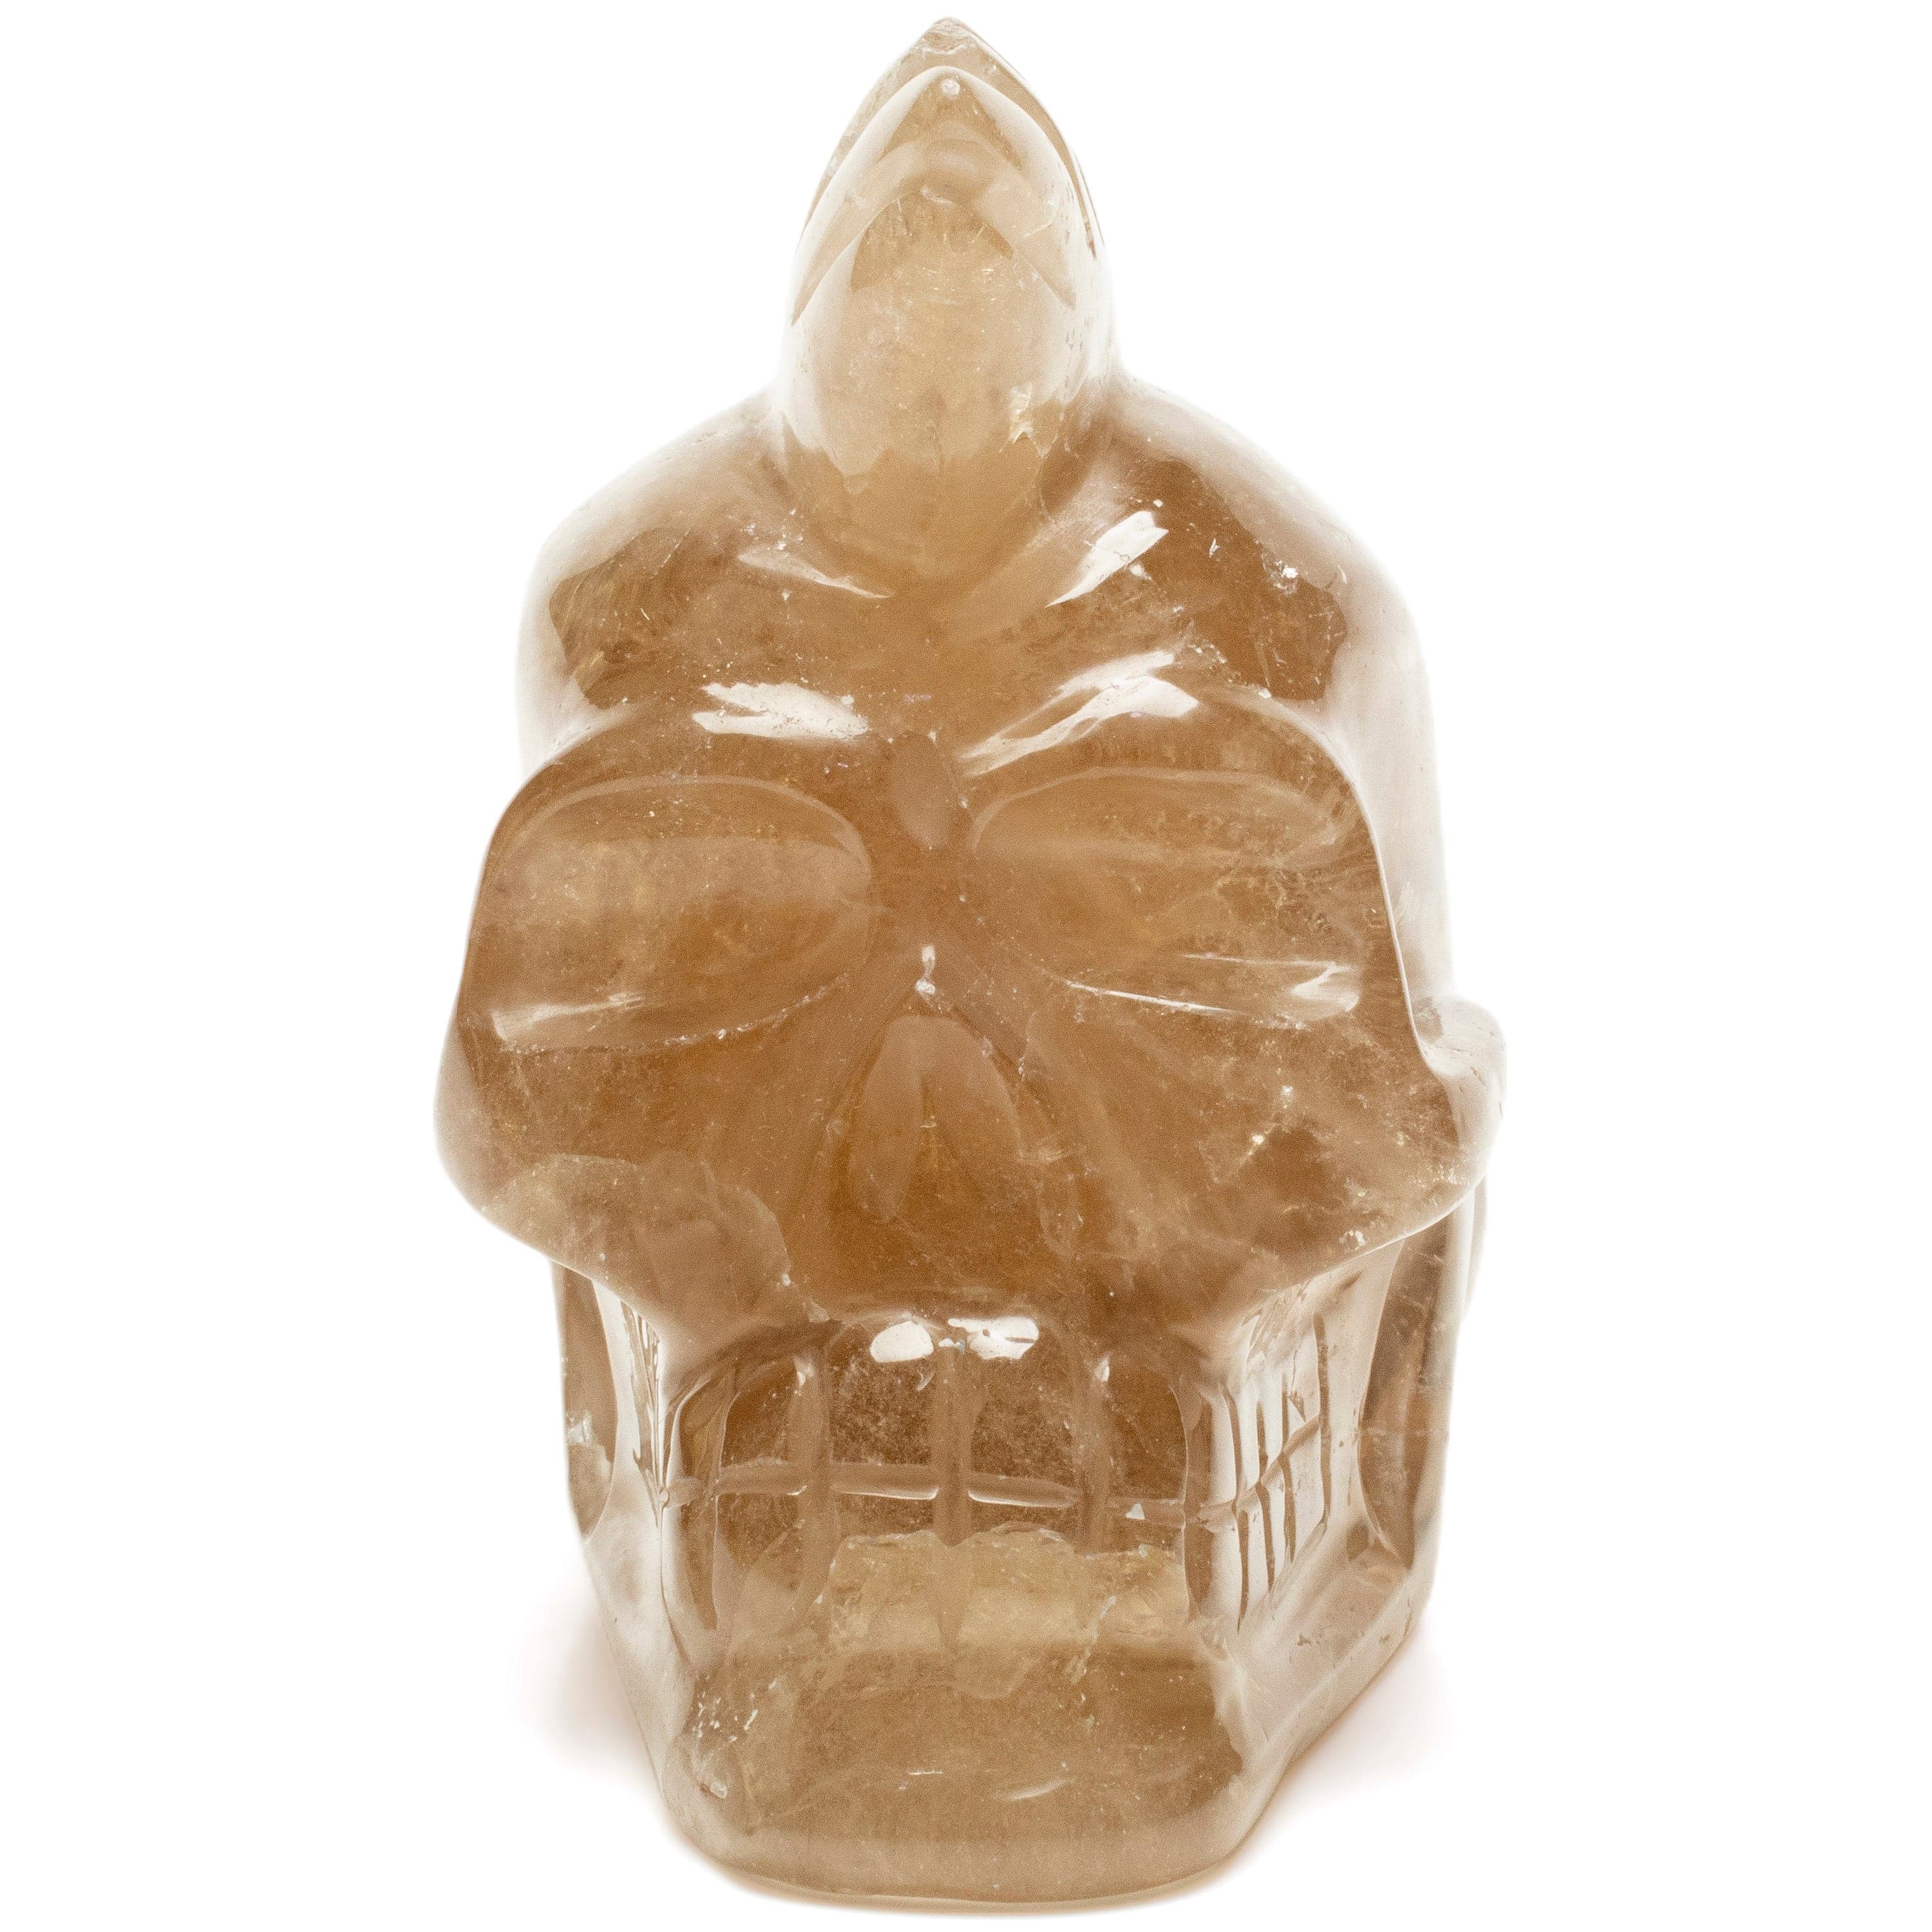 KALIFANO Smoky Quartz Smoky Quartz Skull Carving from Brazil - 3.5" / 750 grams SK4500.006